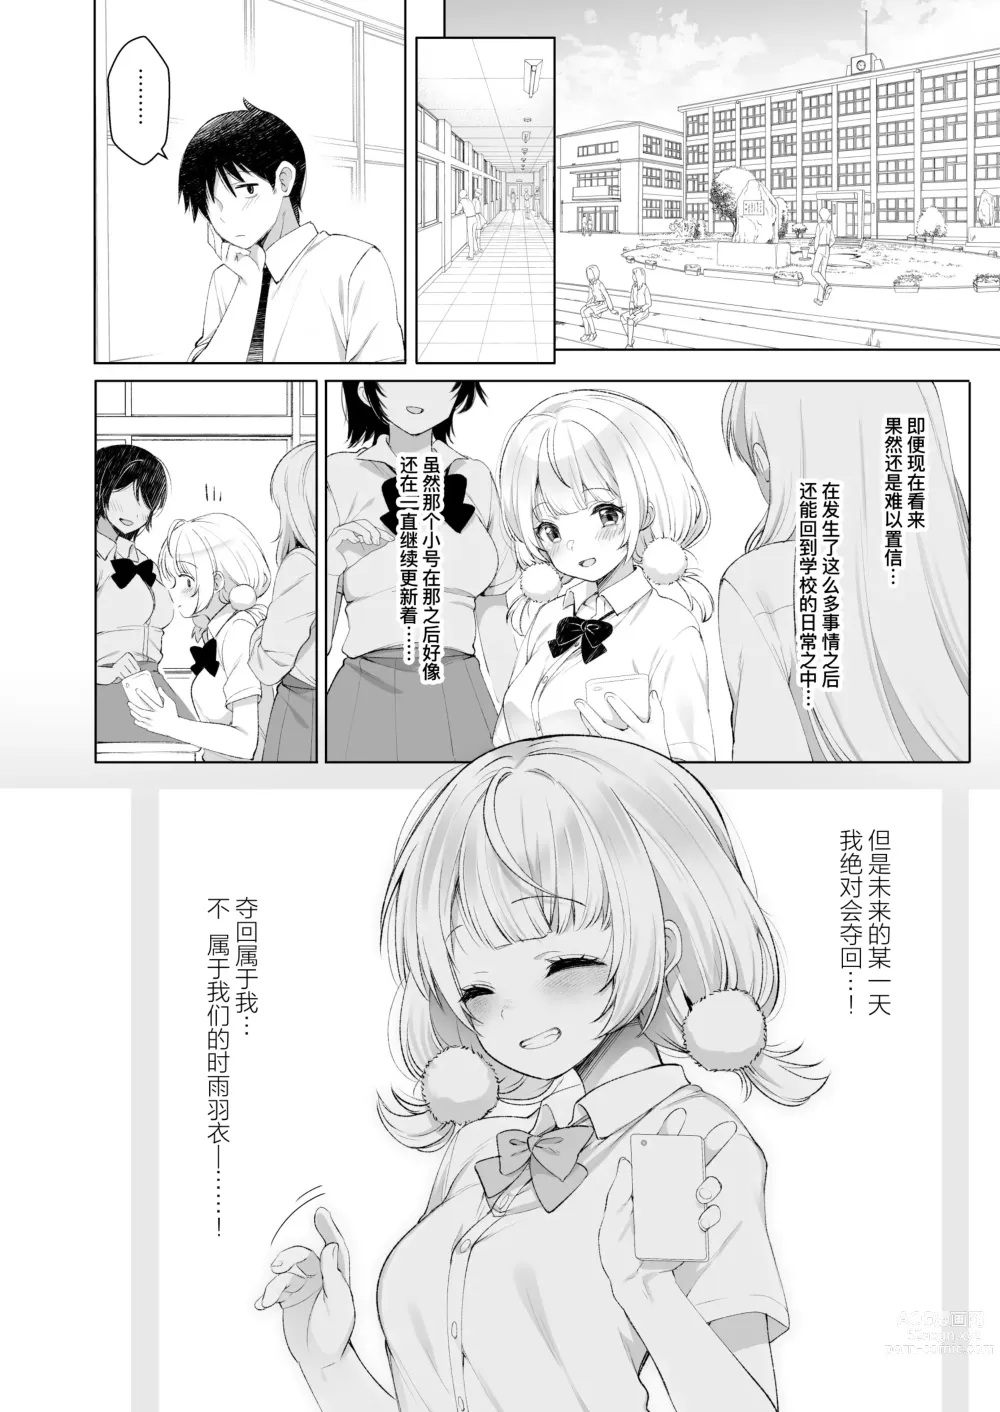 Page 33 of doujinshi 偶像主播时雨羽衣的秘密视频发布2